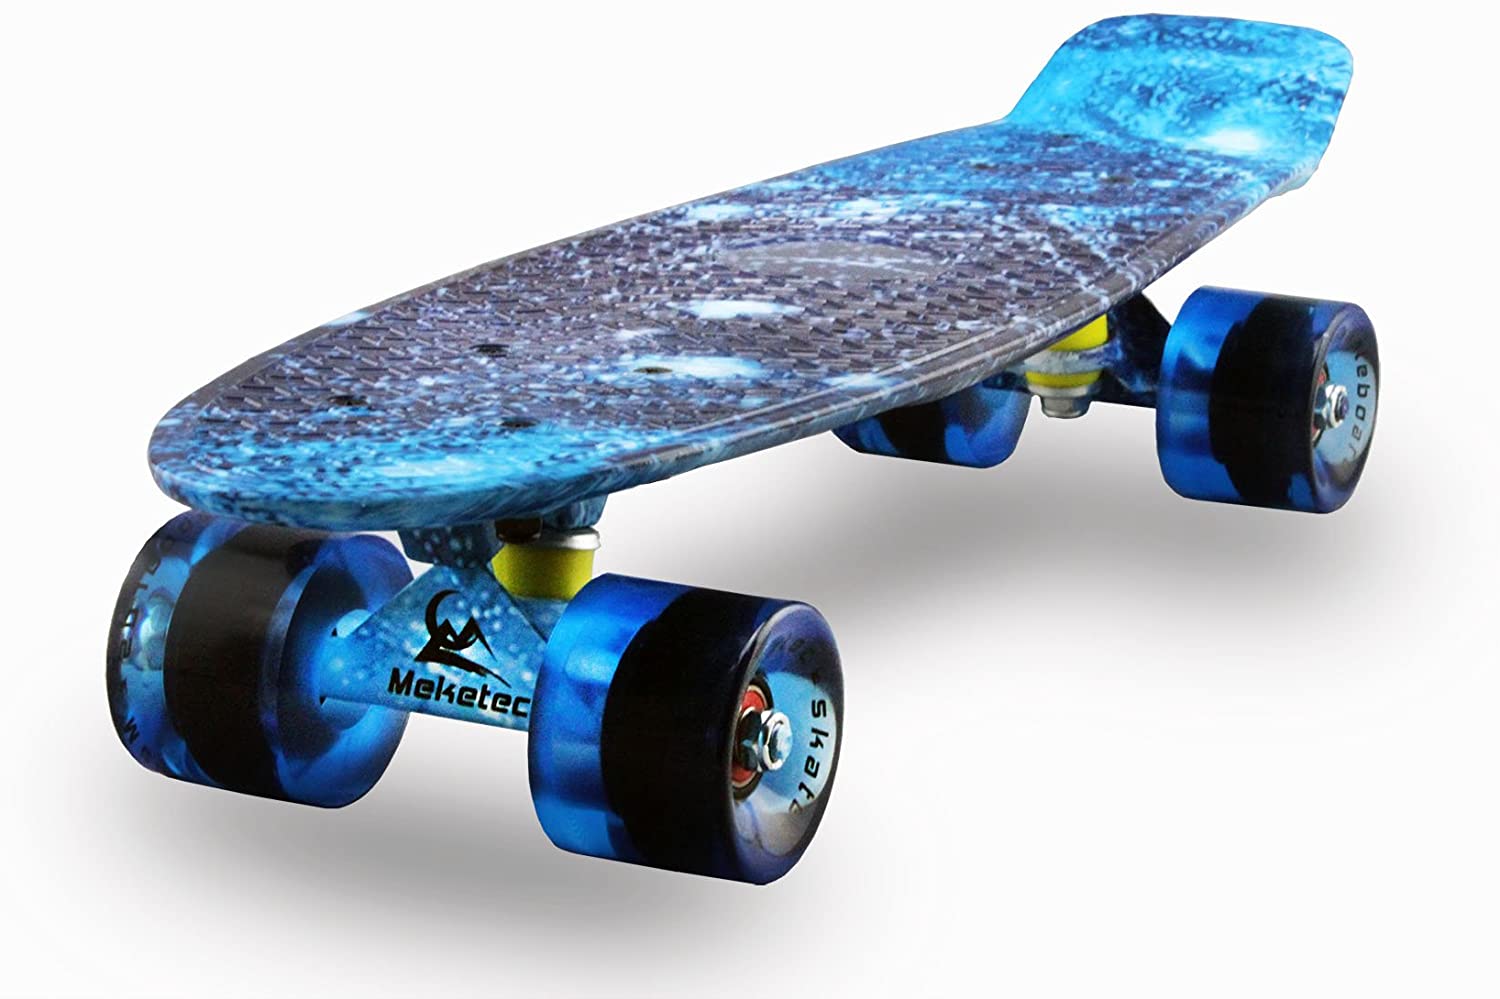 22.5 Inch Micro Board Teens Boys & Girls ARCADE Mini Cruiser Skateboard Complete Vintage Skate Board for Beginners Kids 